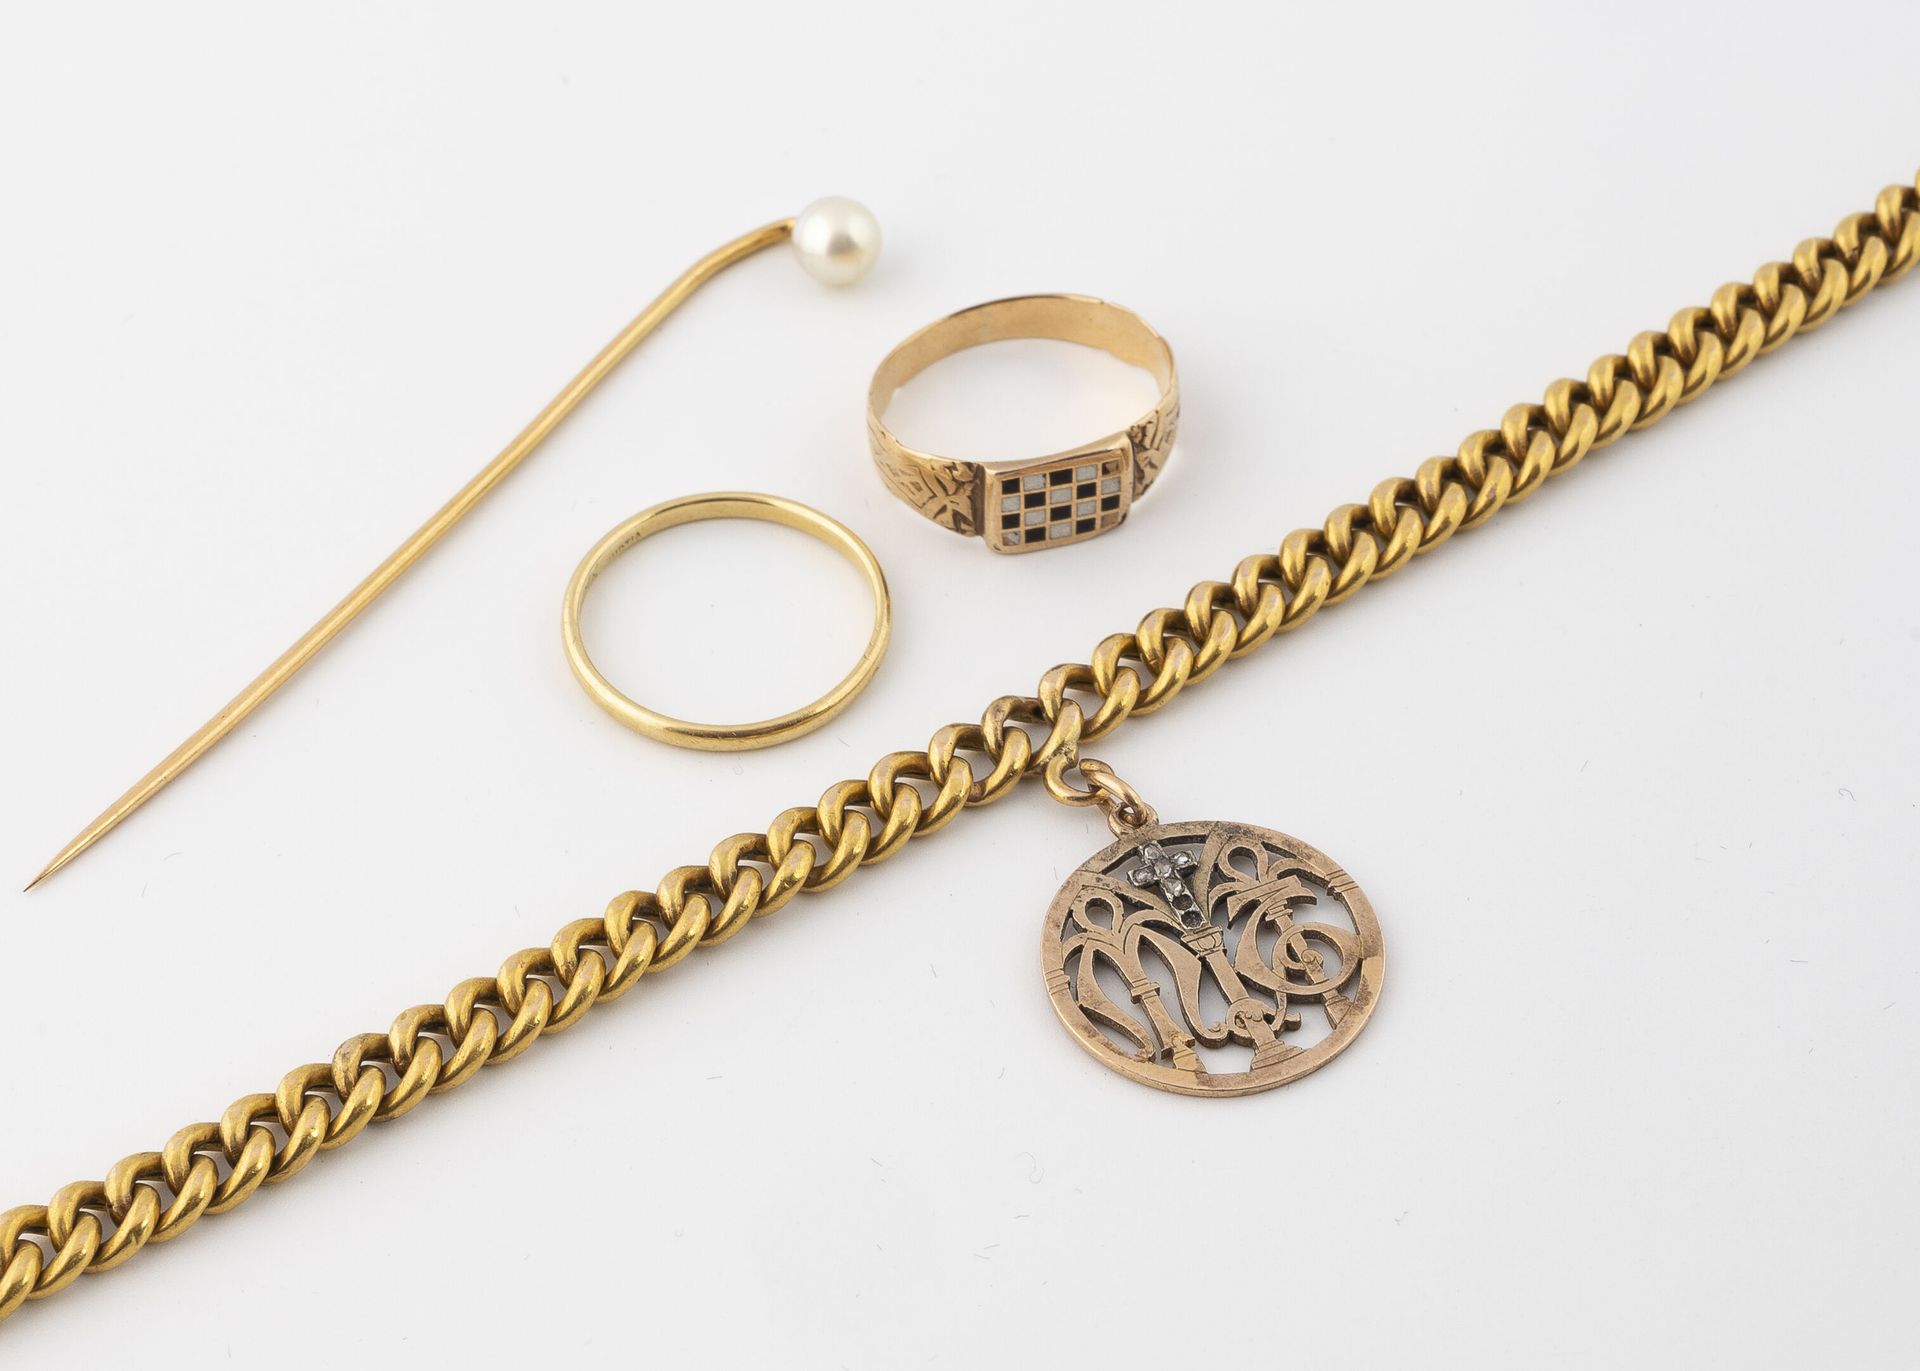 Null 黄金（750）拍品包括两个戒指、一个手镯和一个镶有珍珠的针。
总重量：14.6克。
变形和划痕。